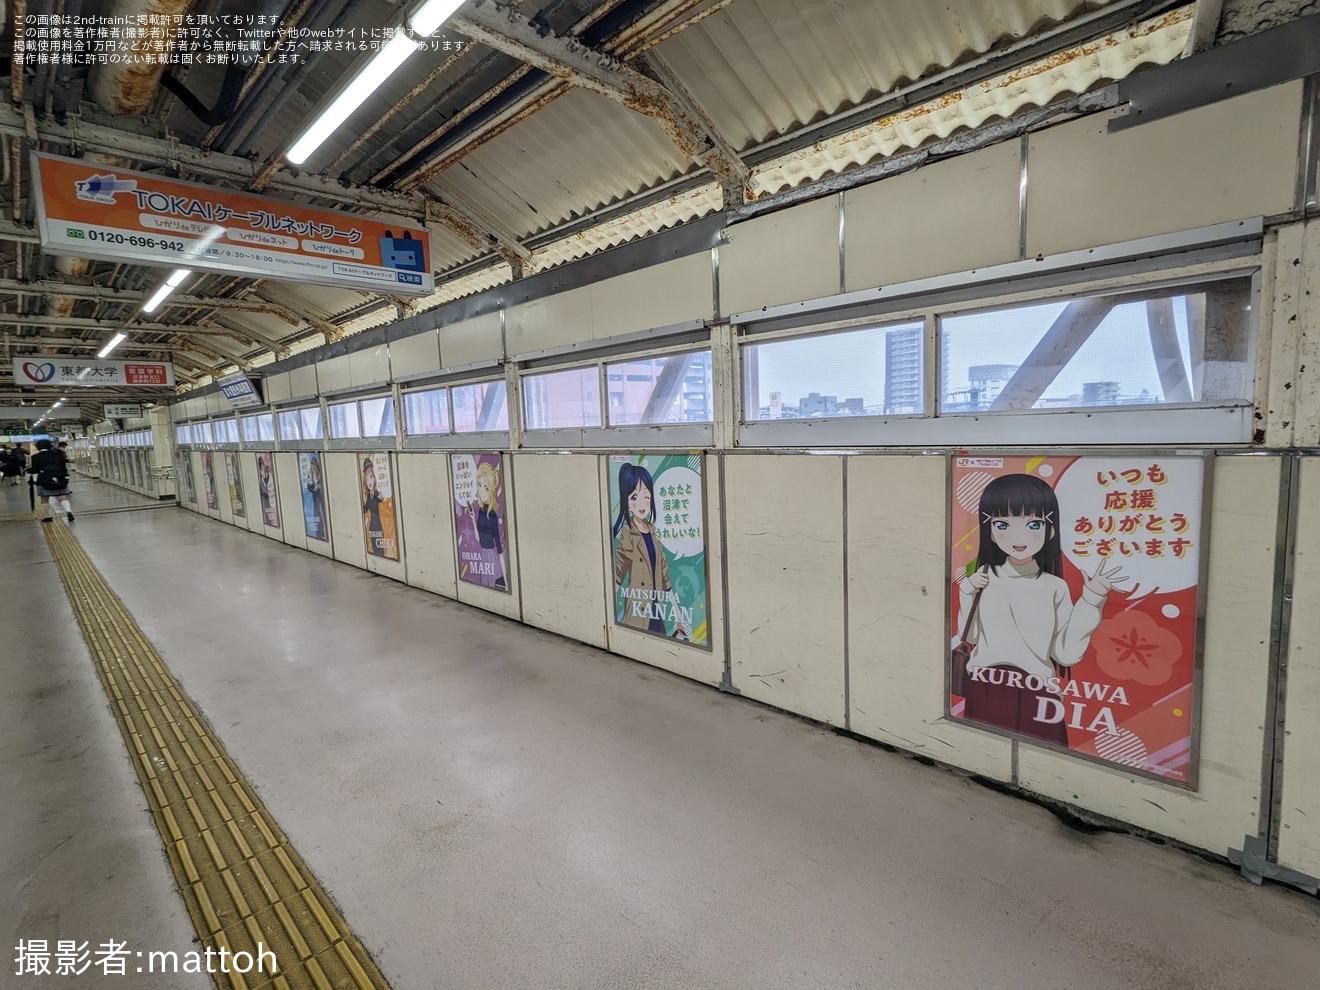 【JR海】沼津駅が「ラブライブ!サンシャイン!!」の「渡辺曜」誕生日仕様にの拡大写真